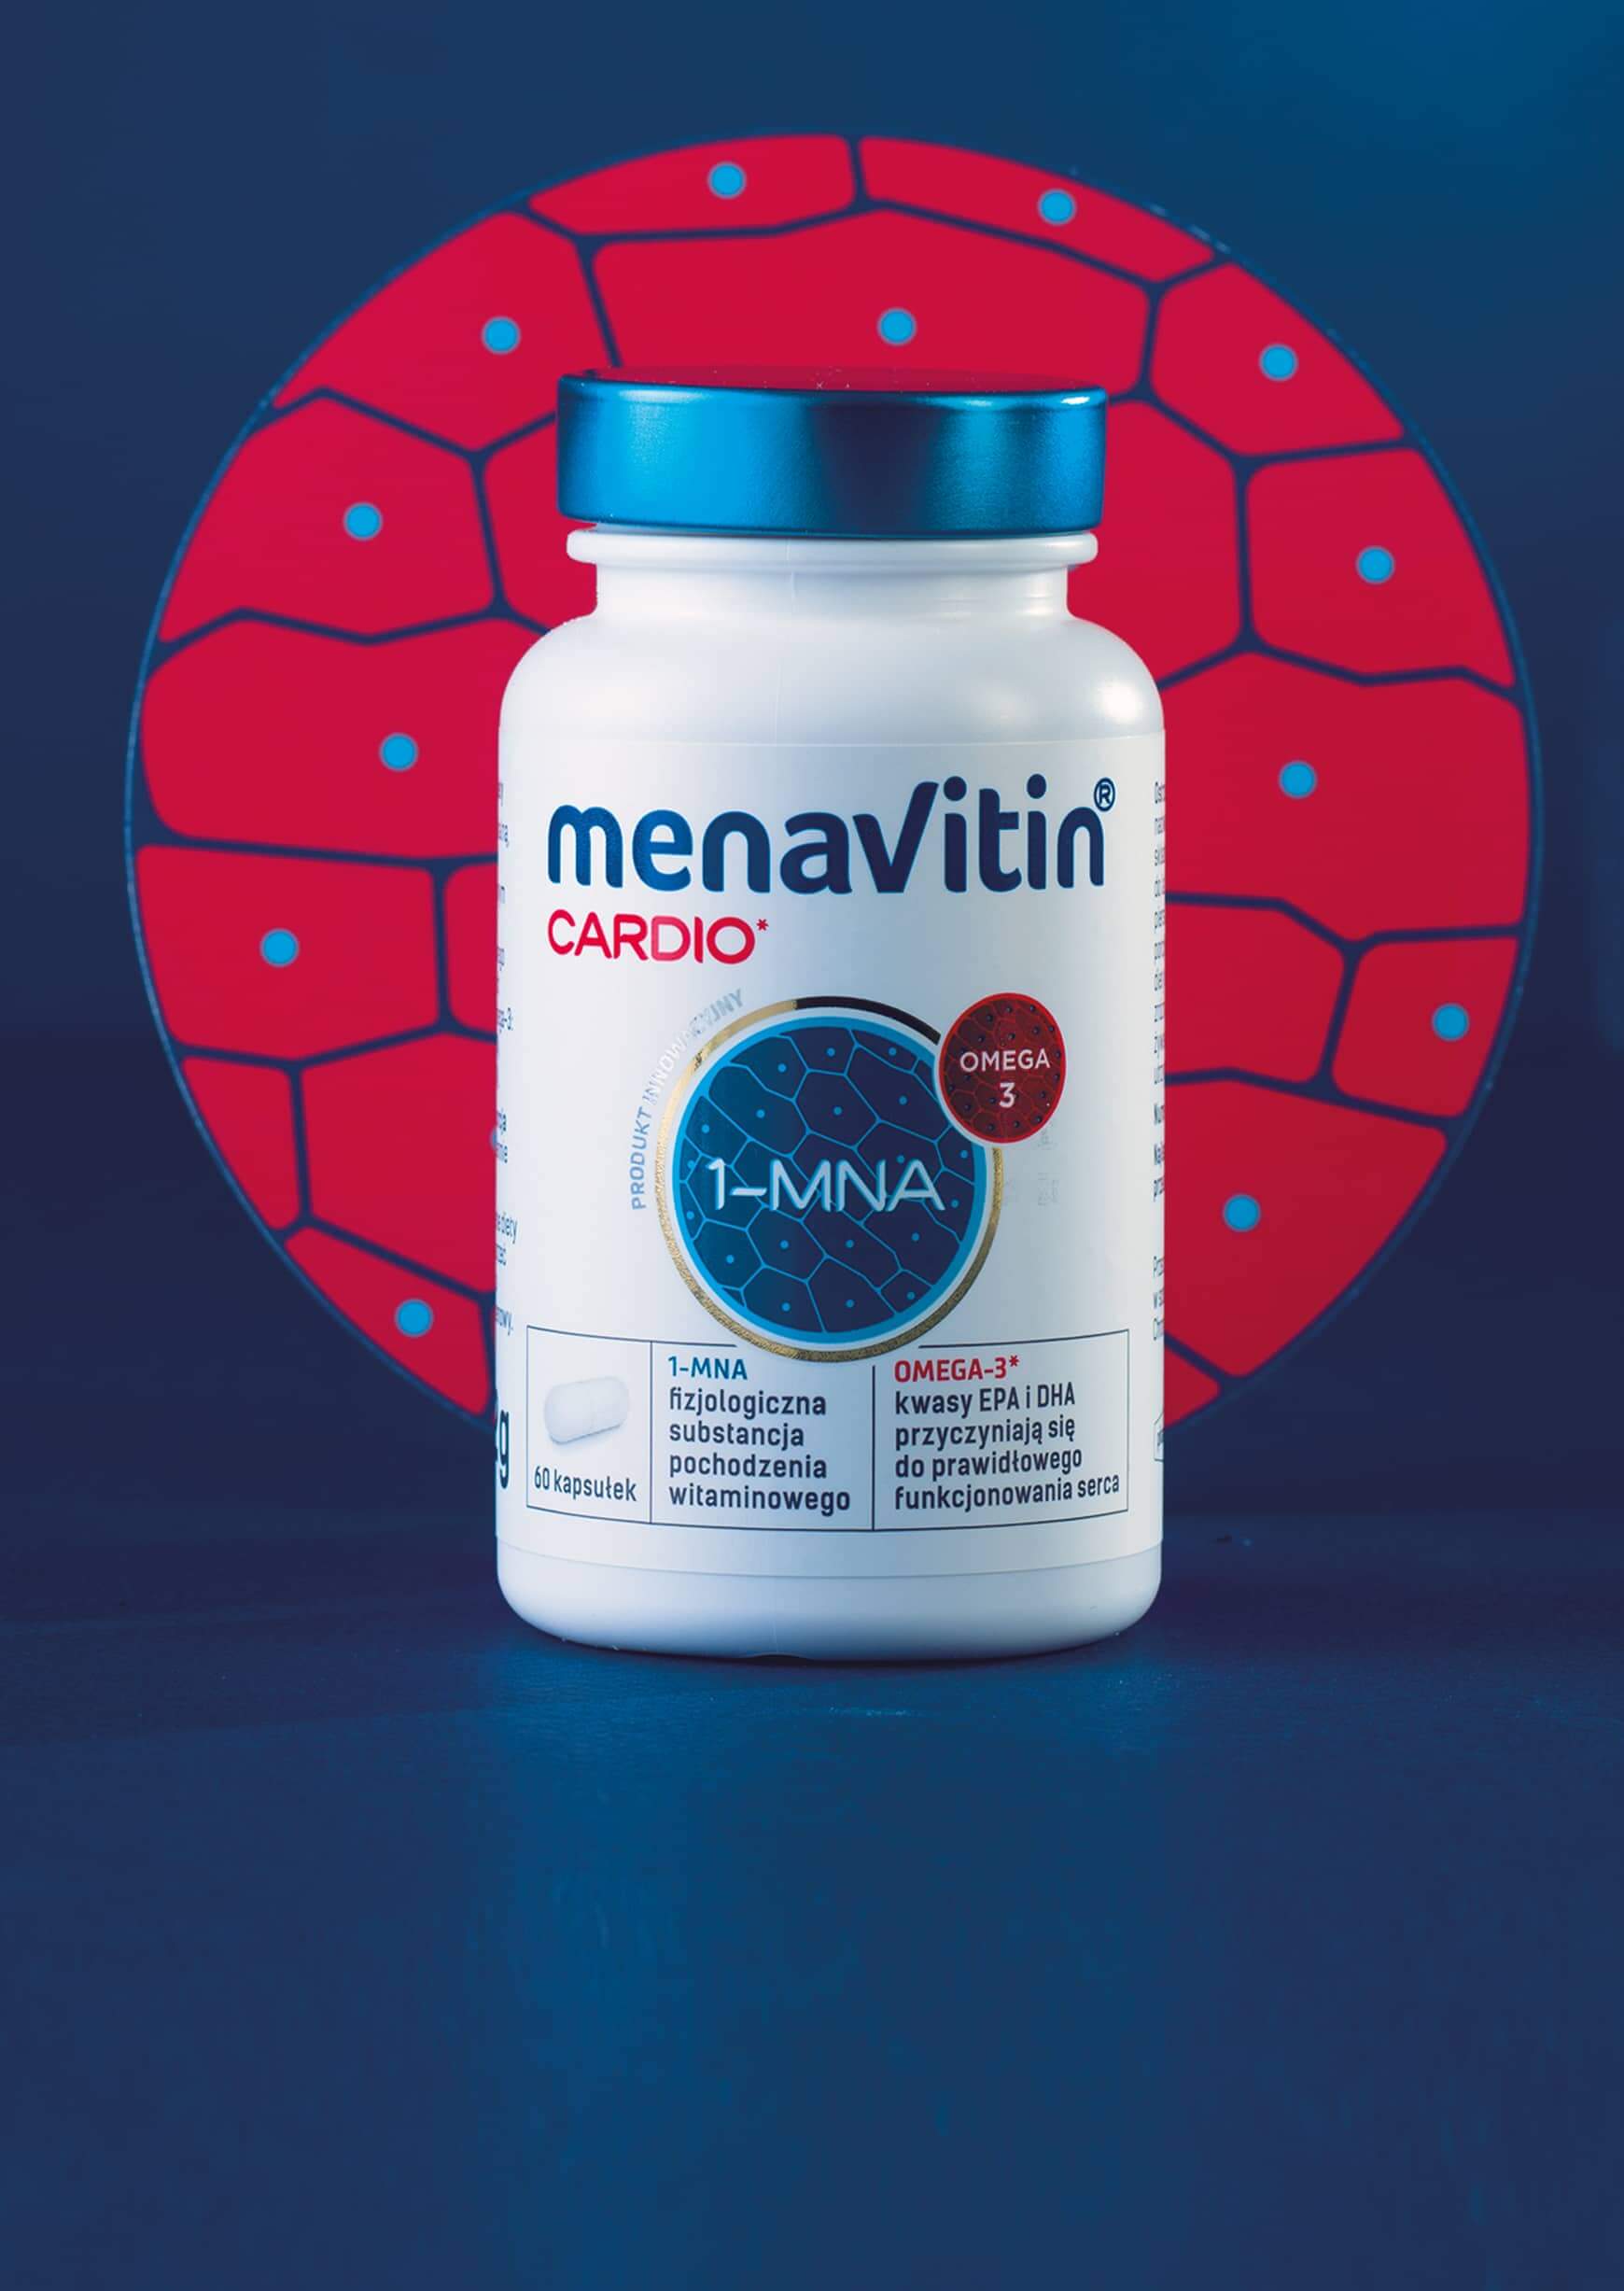 Menavitin – kreacja marki parasolowej